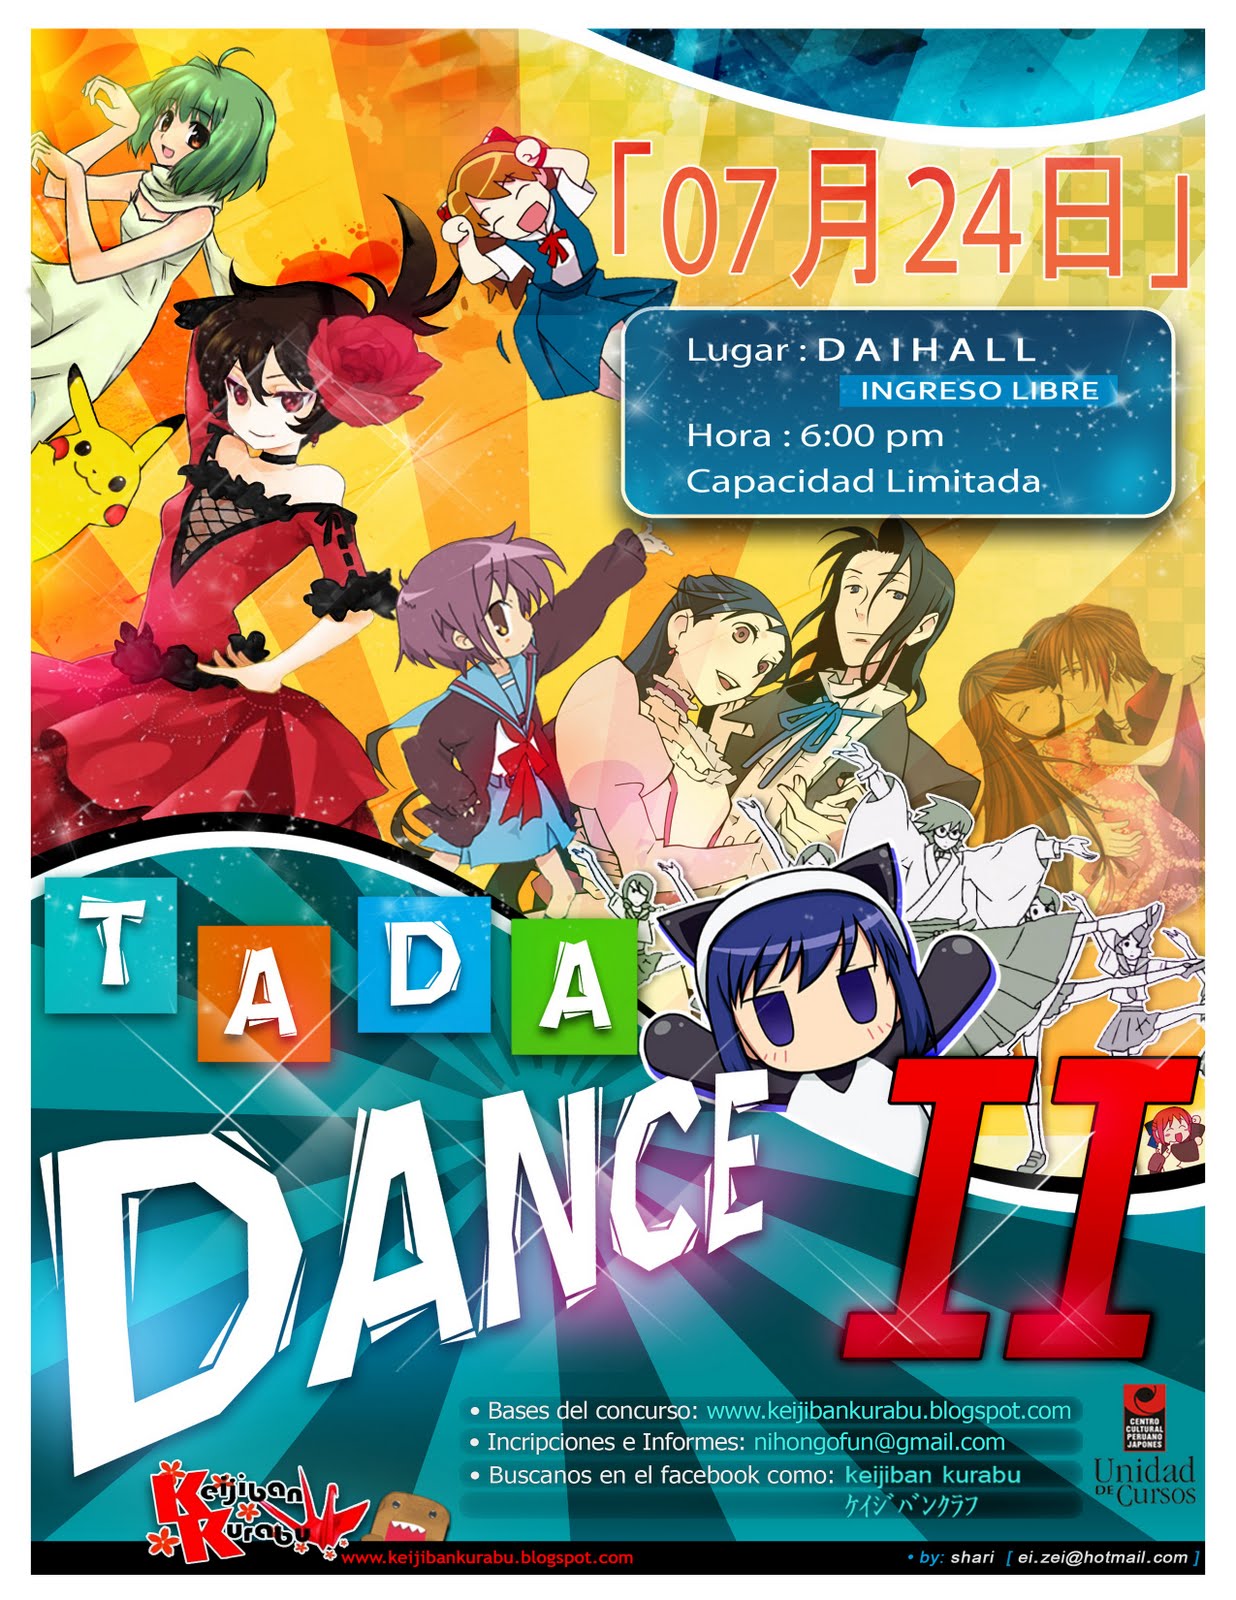 Julio 24 : Tada Dance II TadaDance2.jpg+arreglado+medida